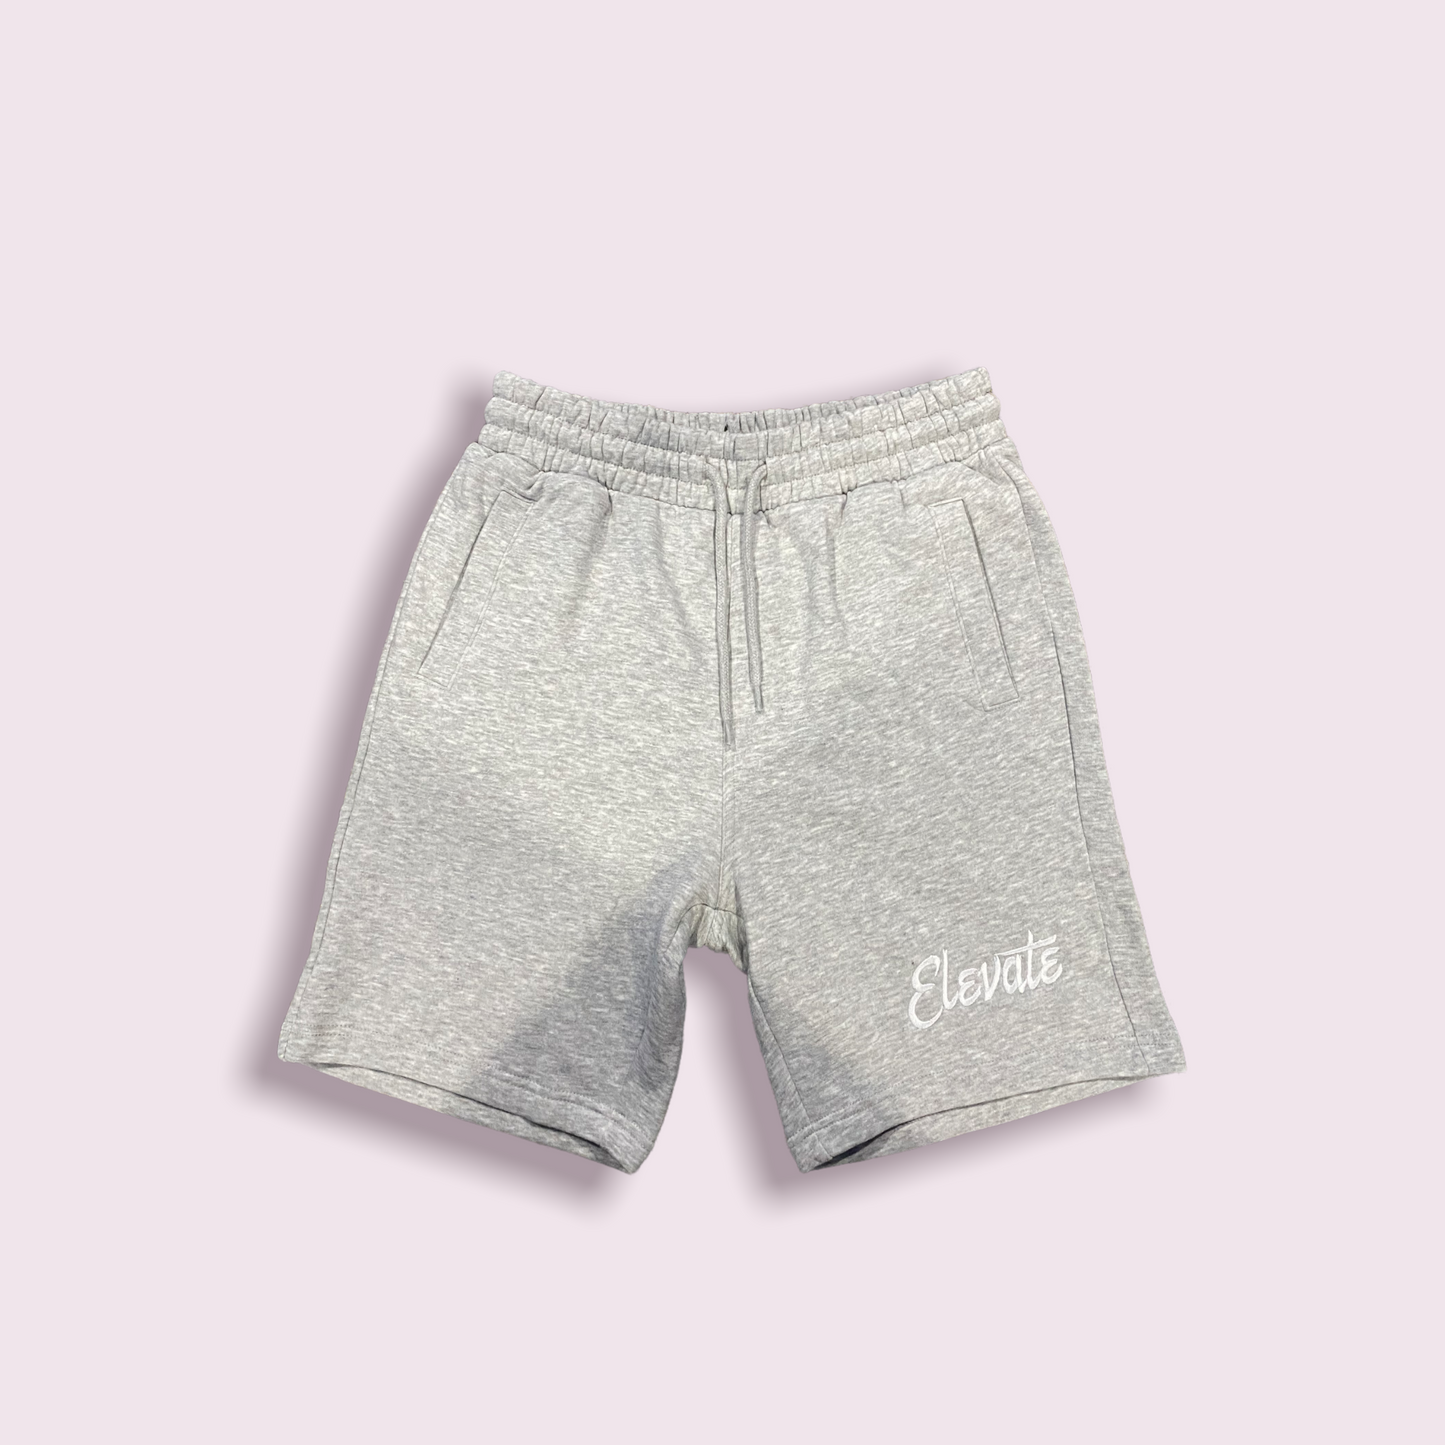 Elevate 2.0 Shorts